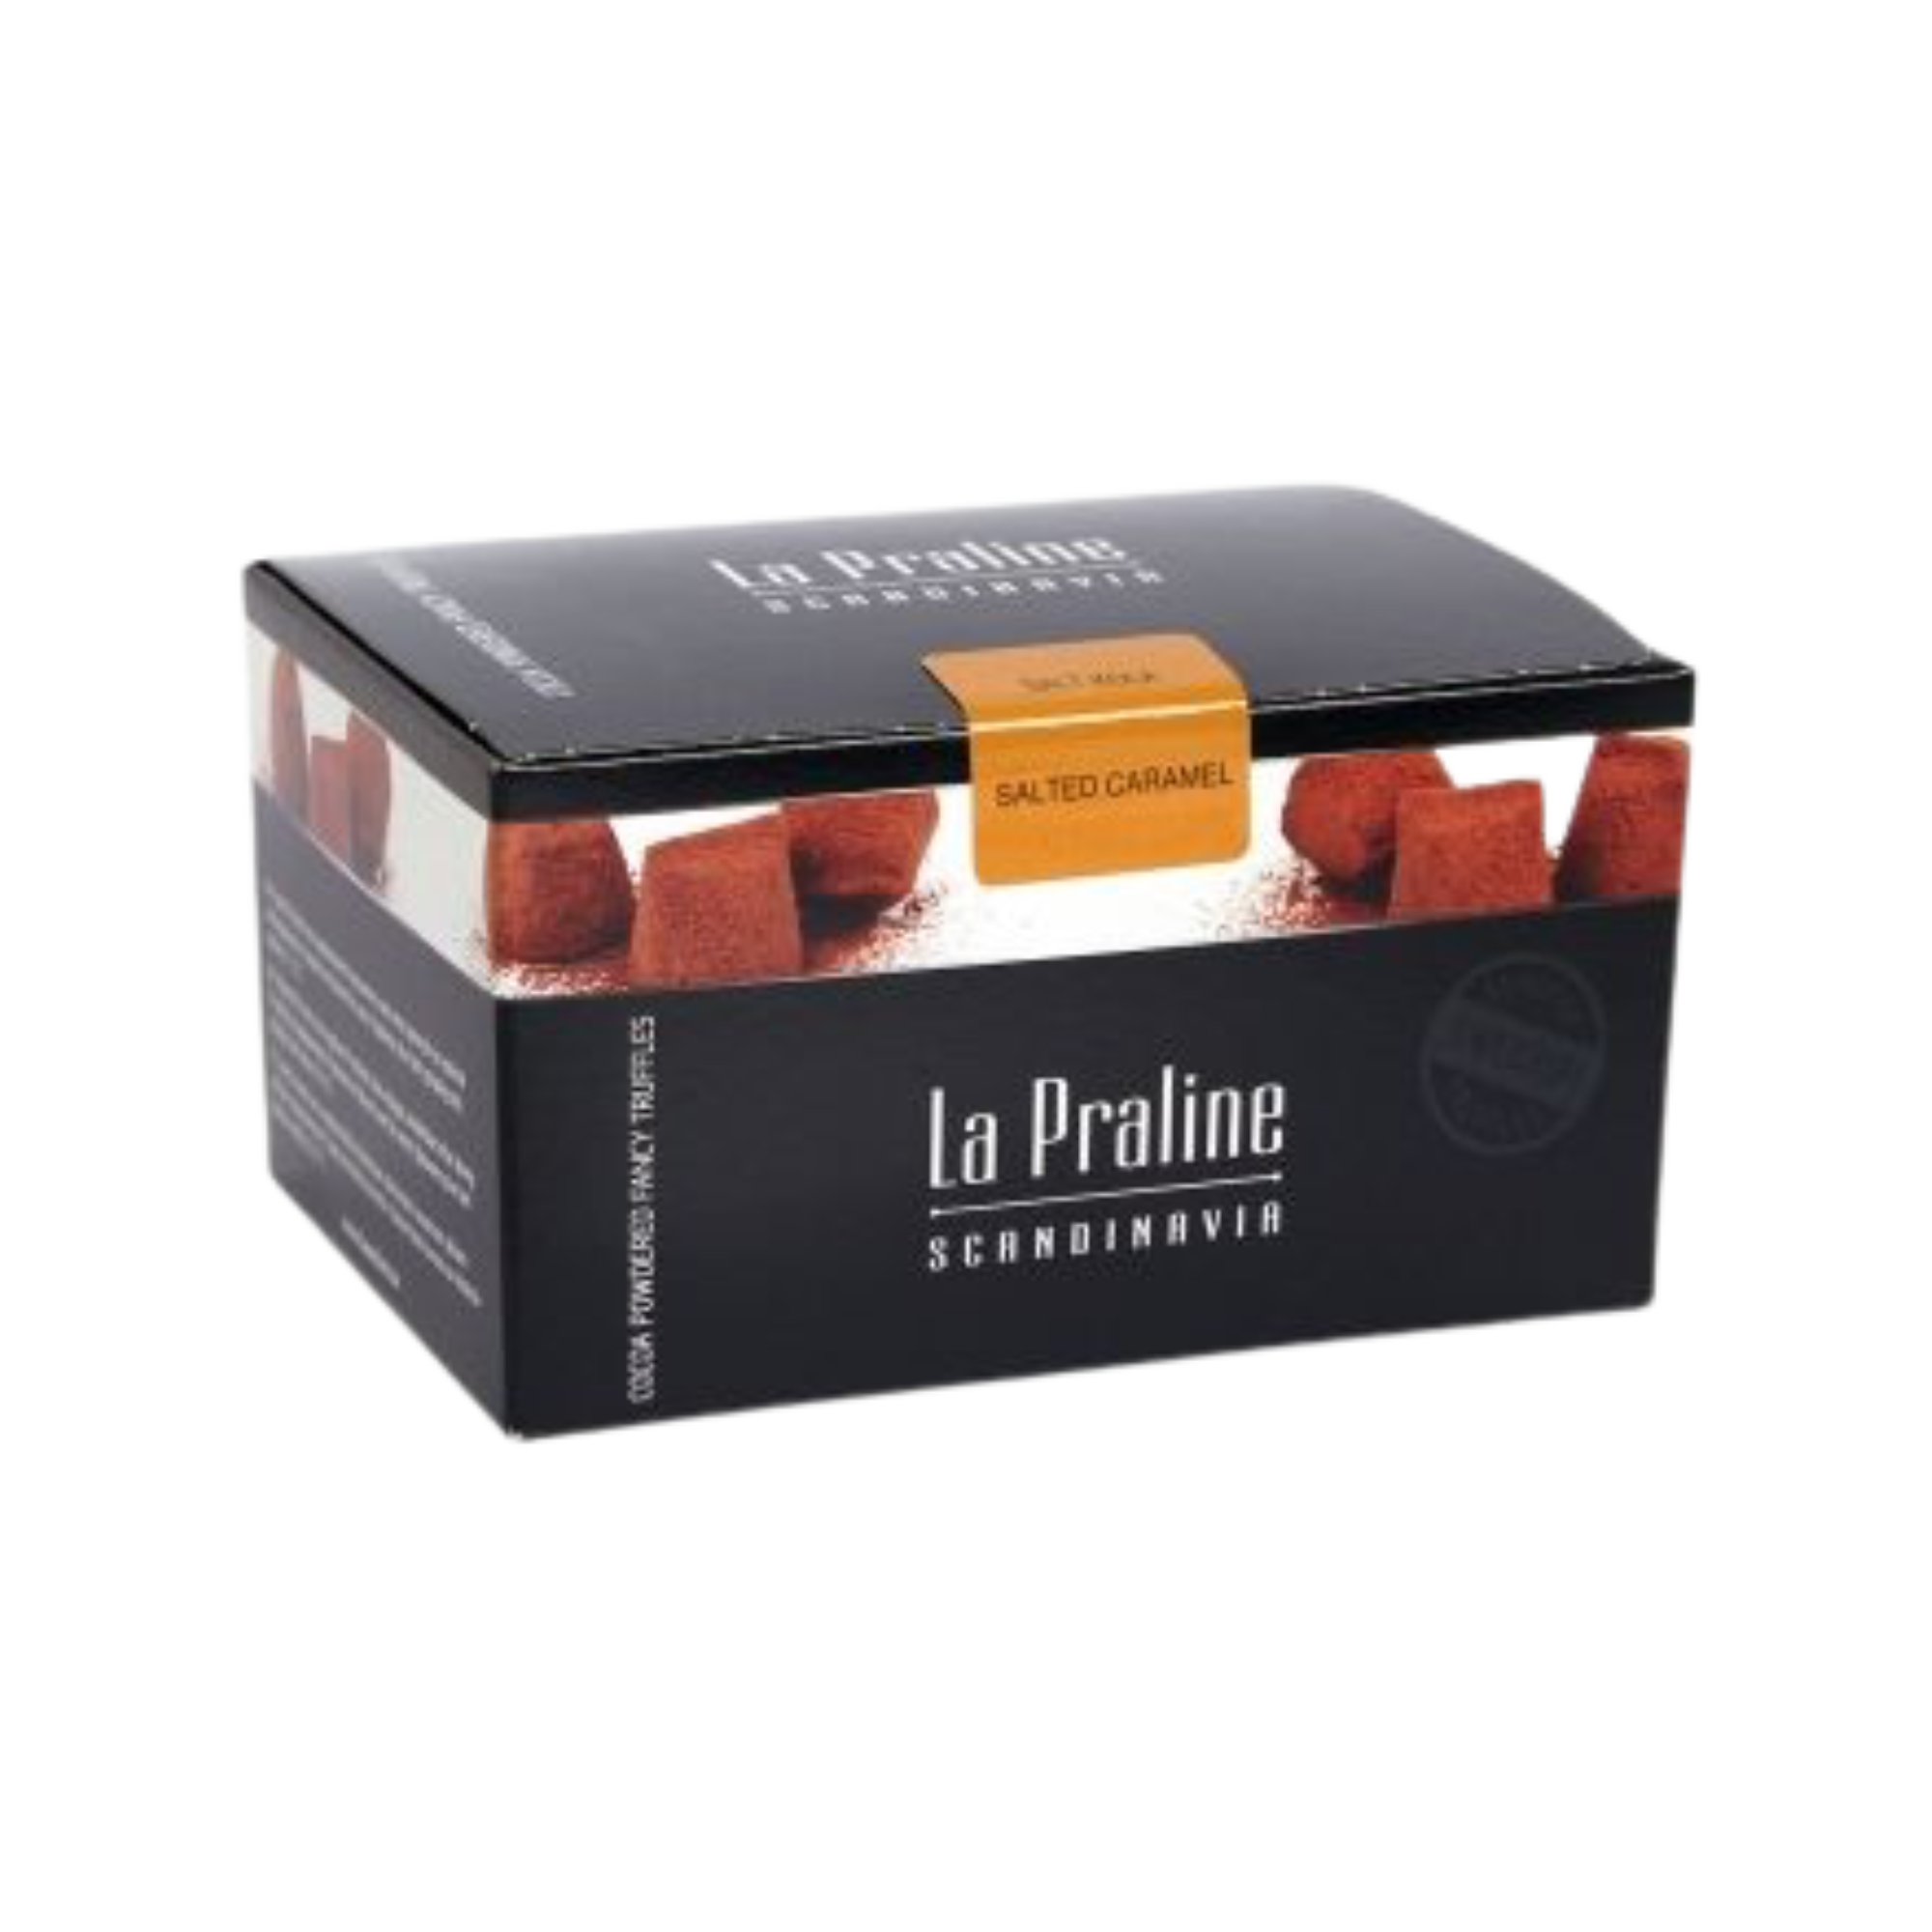 La Praline Trüffelpralinen Packung Salted Caramel 200g